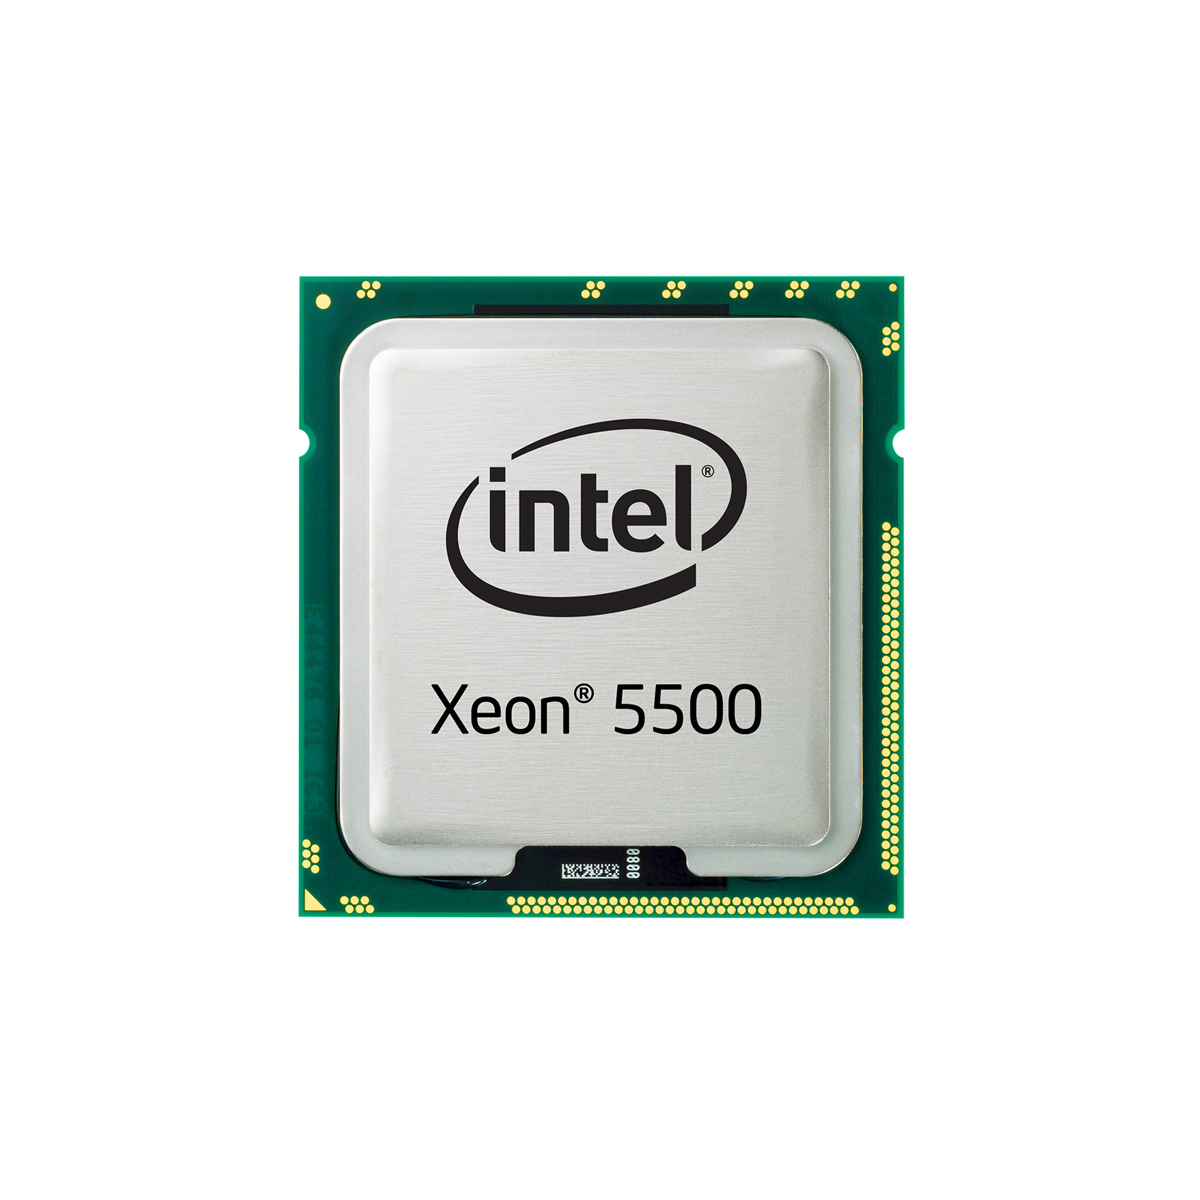 Intel Celeron G1840 2.8GHz Dual Core (Socket 1150)